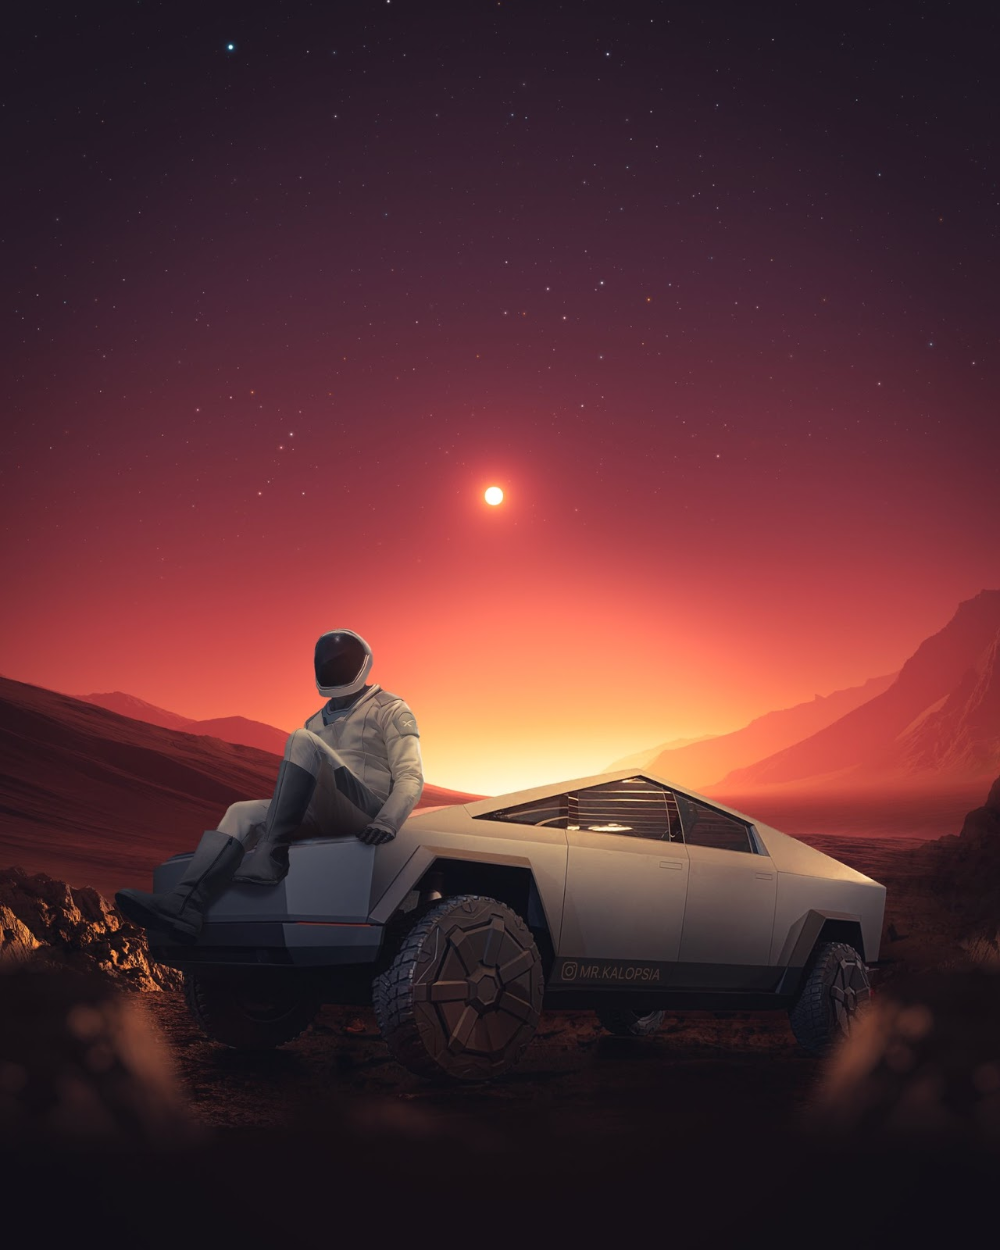 Starman resting at his Tesla Cybertruck on Mars